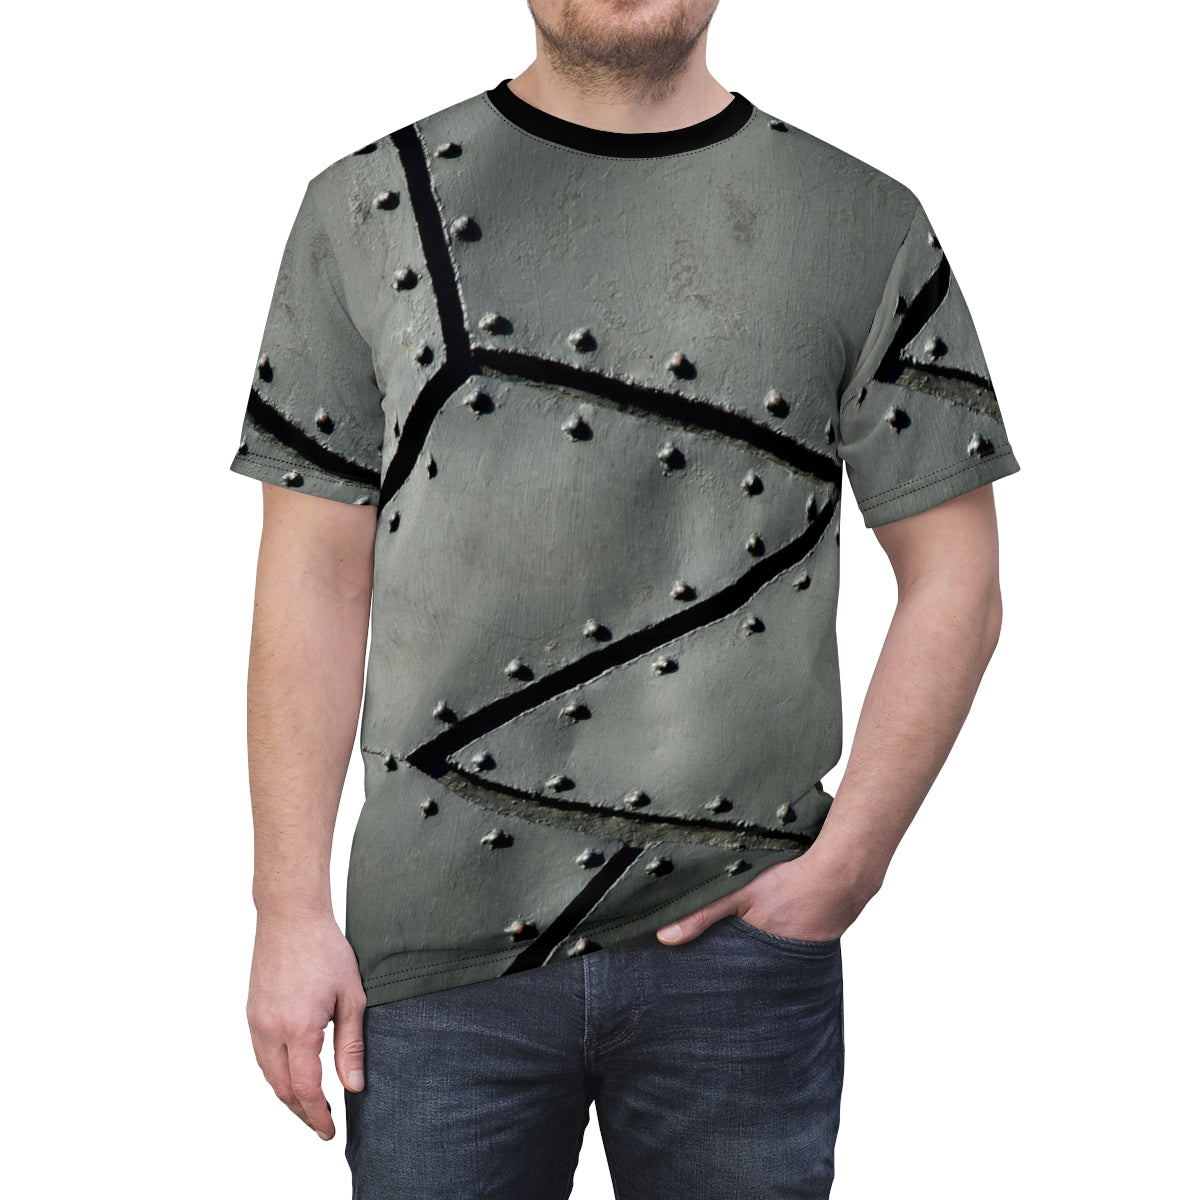 Iron Plate Armor Shirt